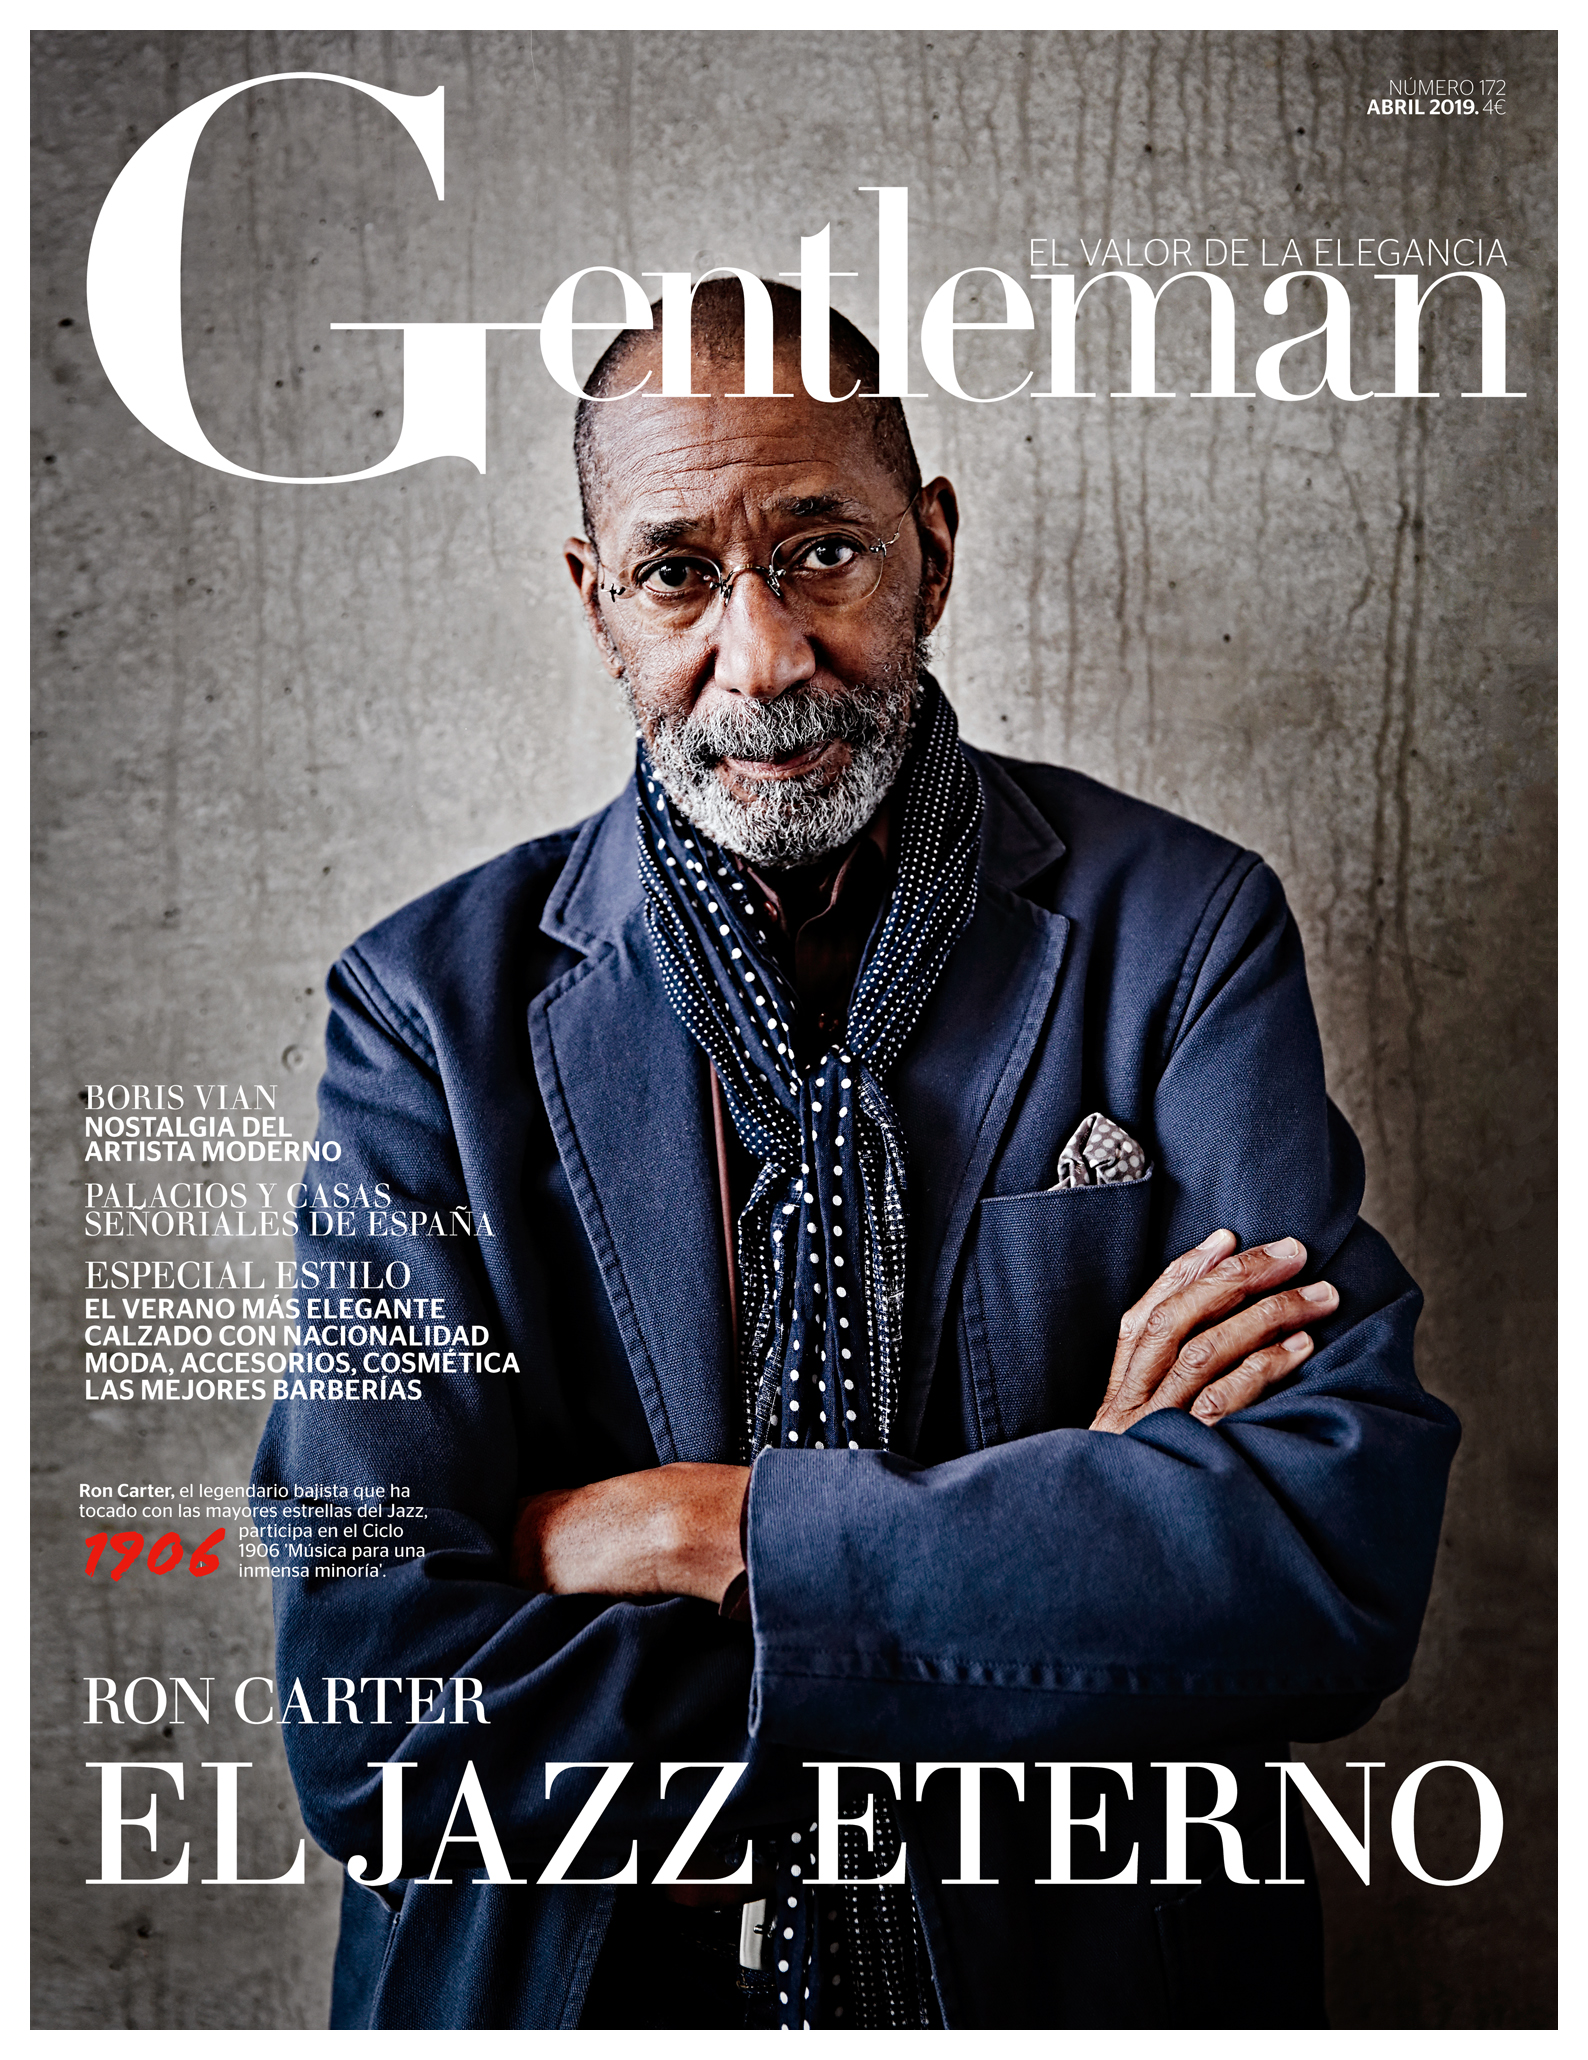  Ron Carter on cover Spanisch 'Gentleman' Magazine. 